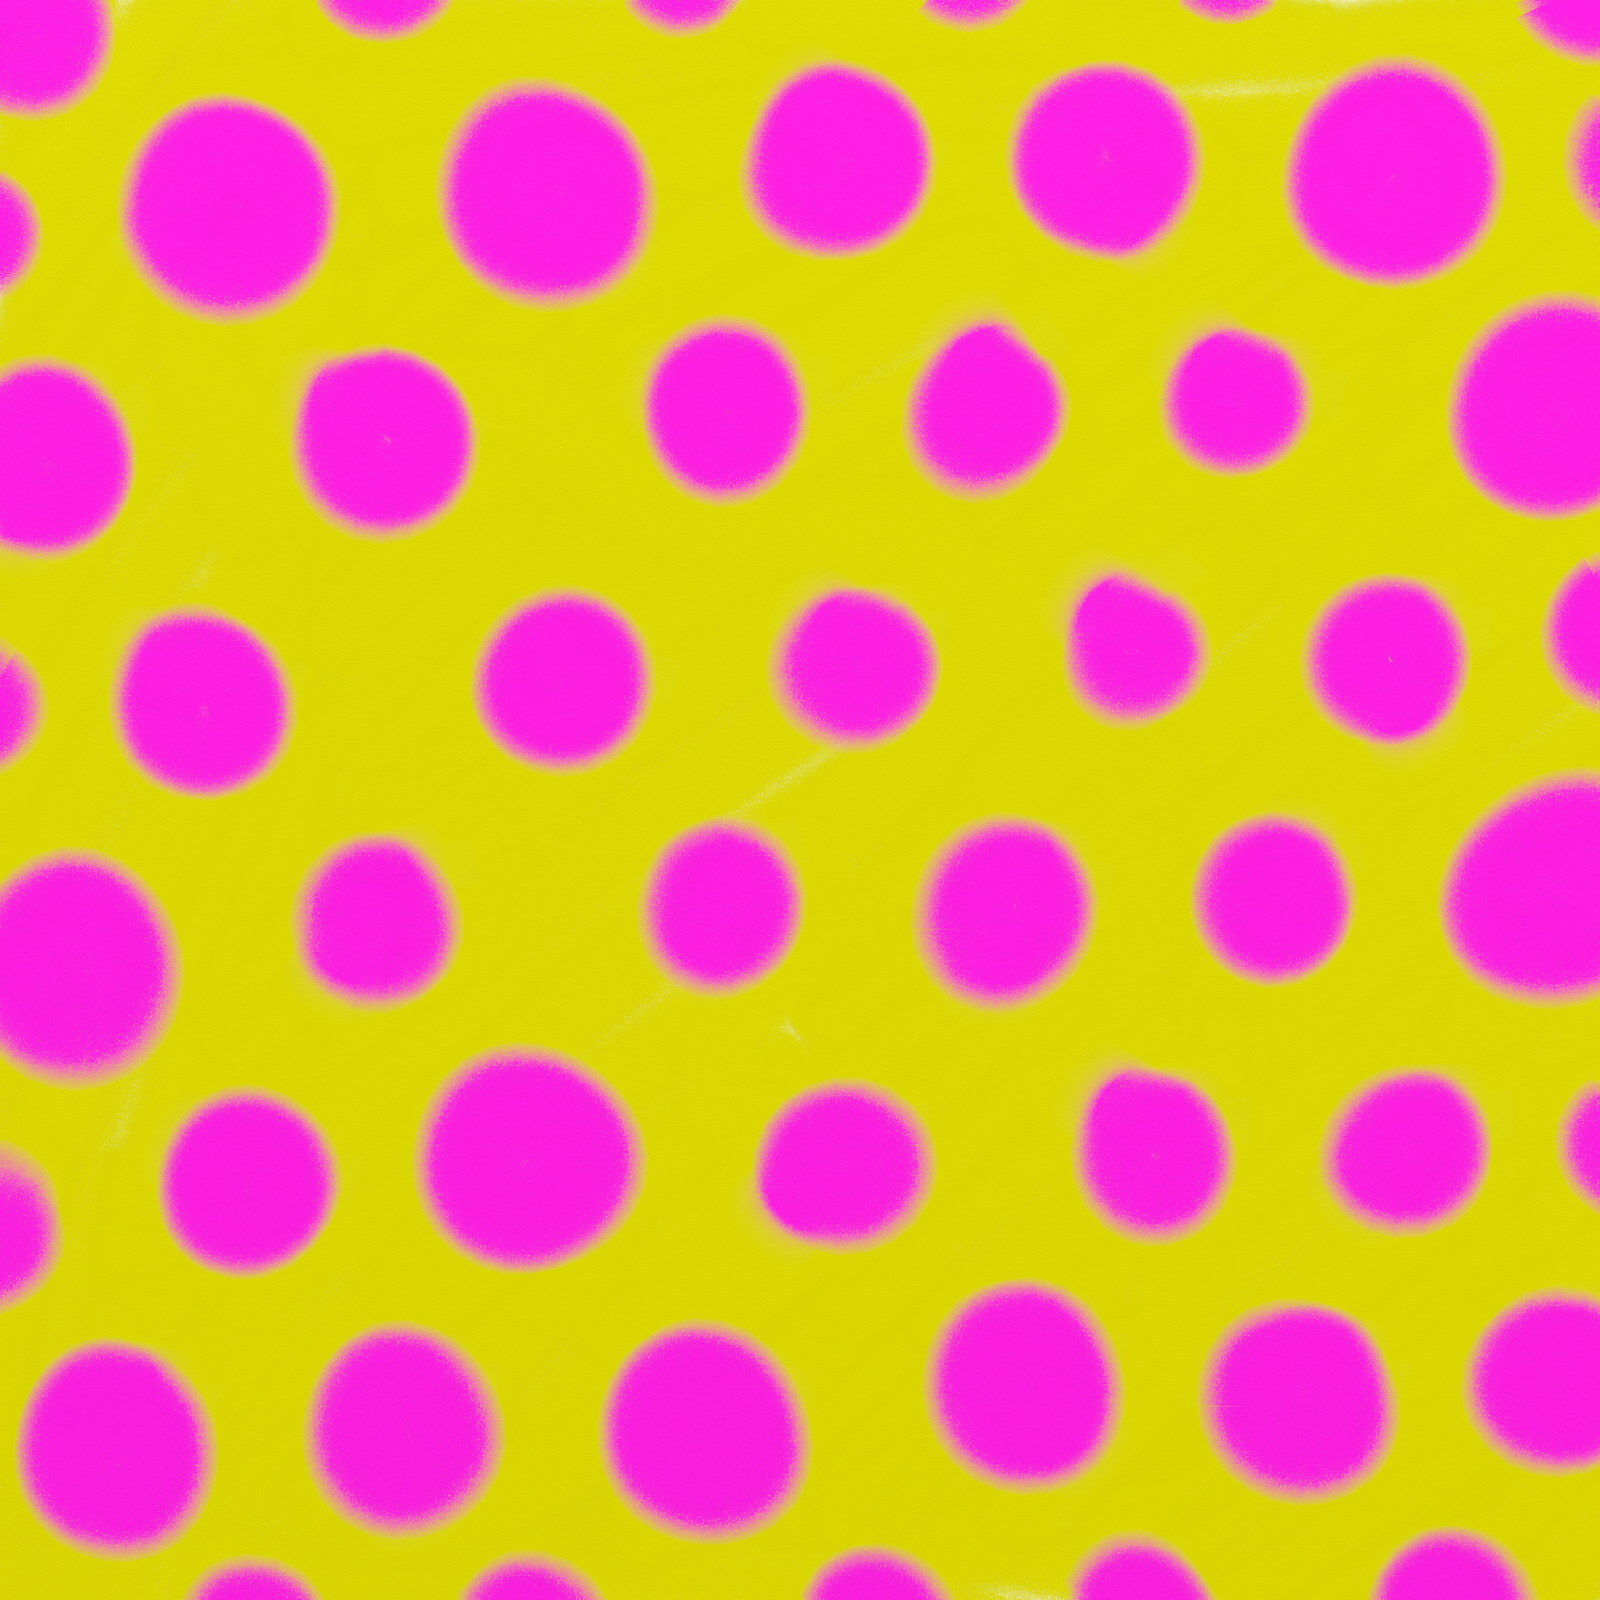 Polka dots photo